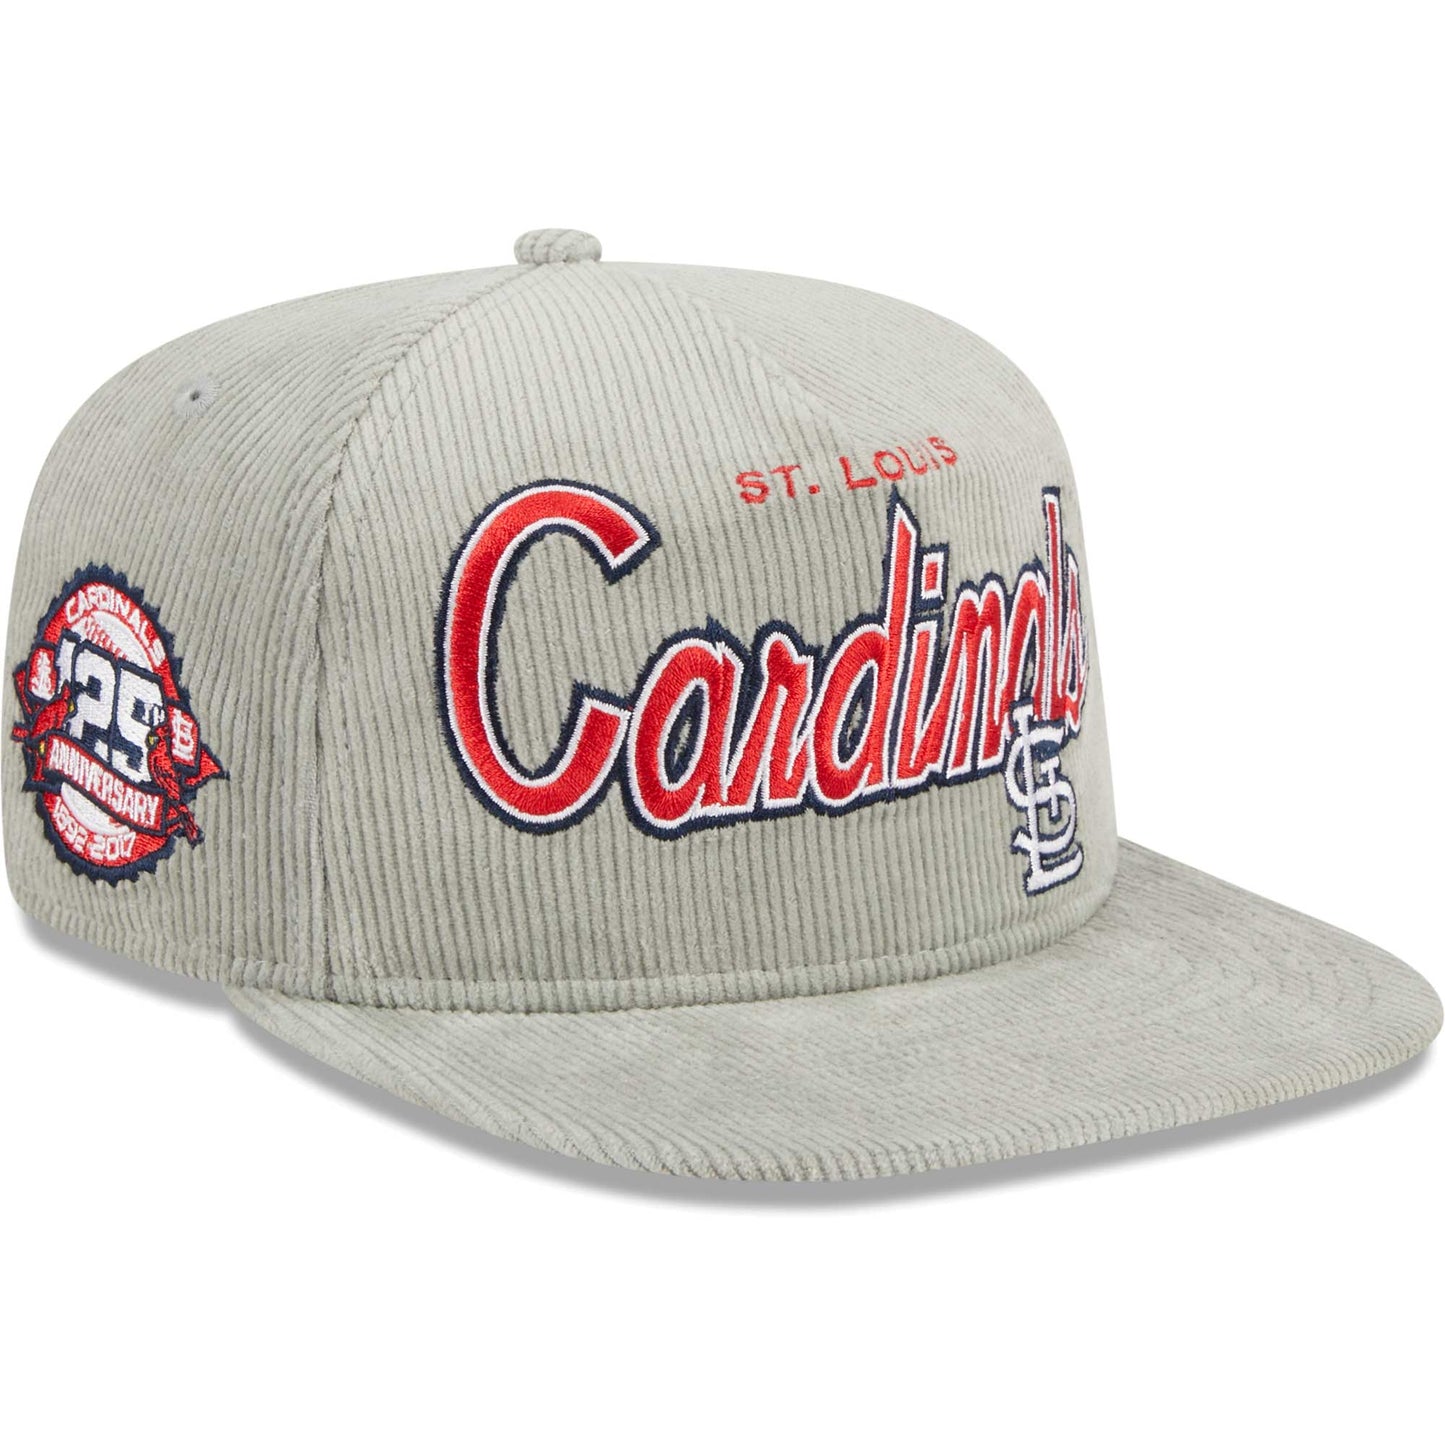 St. Louis Cardinals New Era Corduroy Golfer Adjustable Hat - Gray